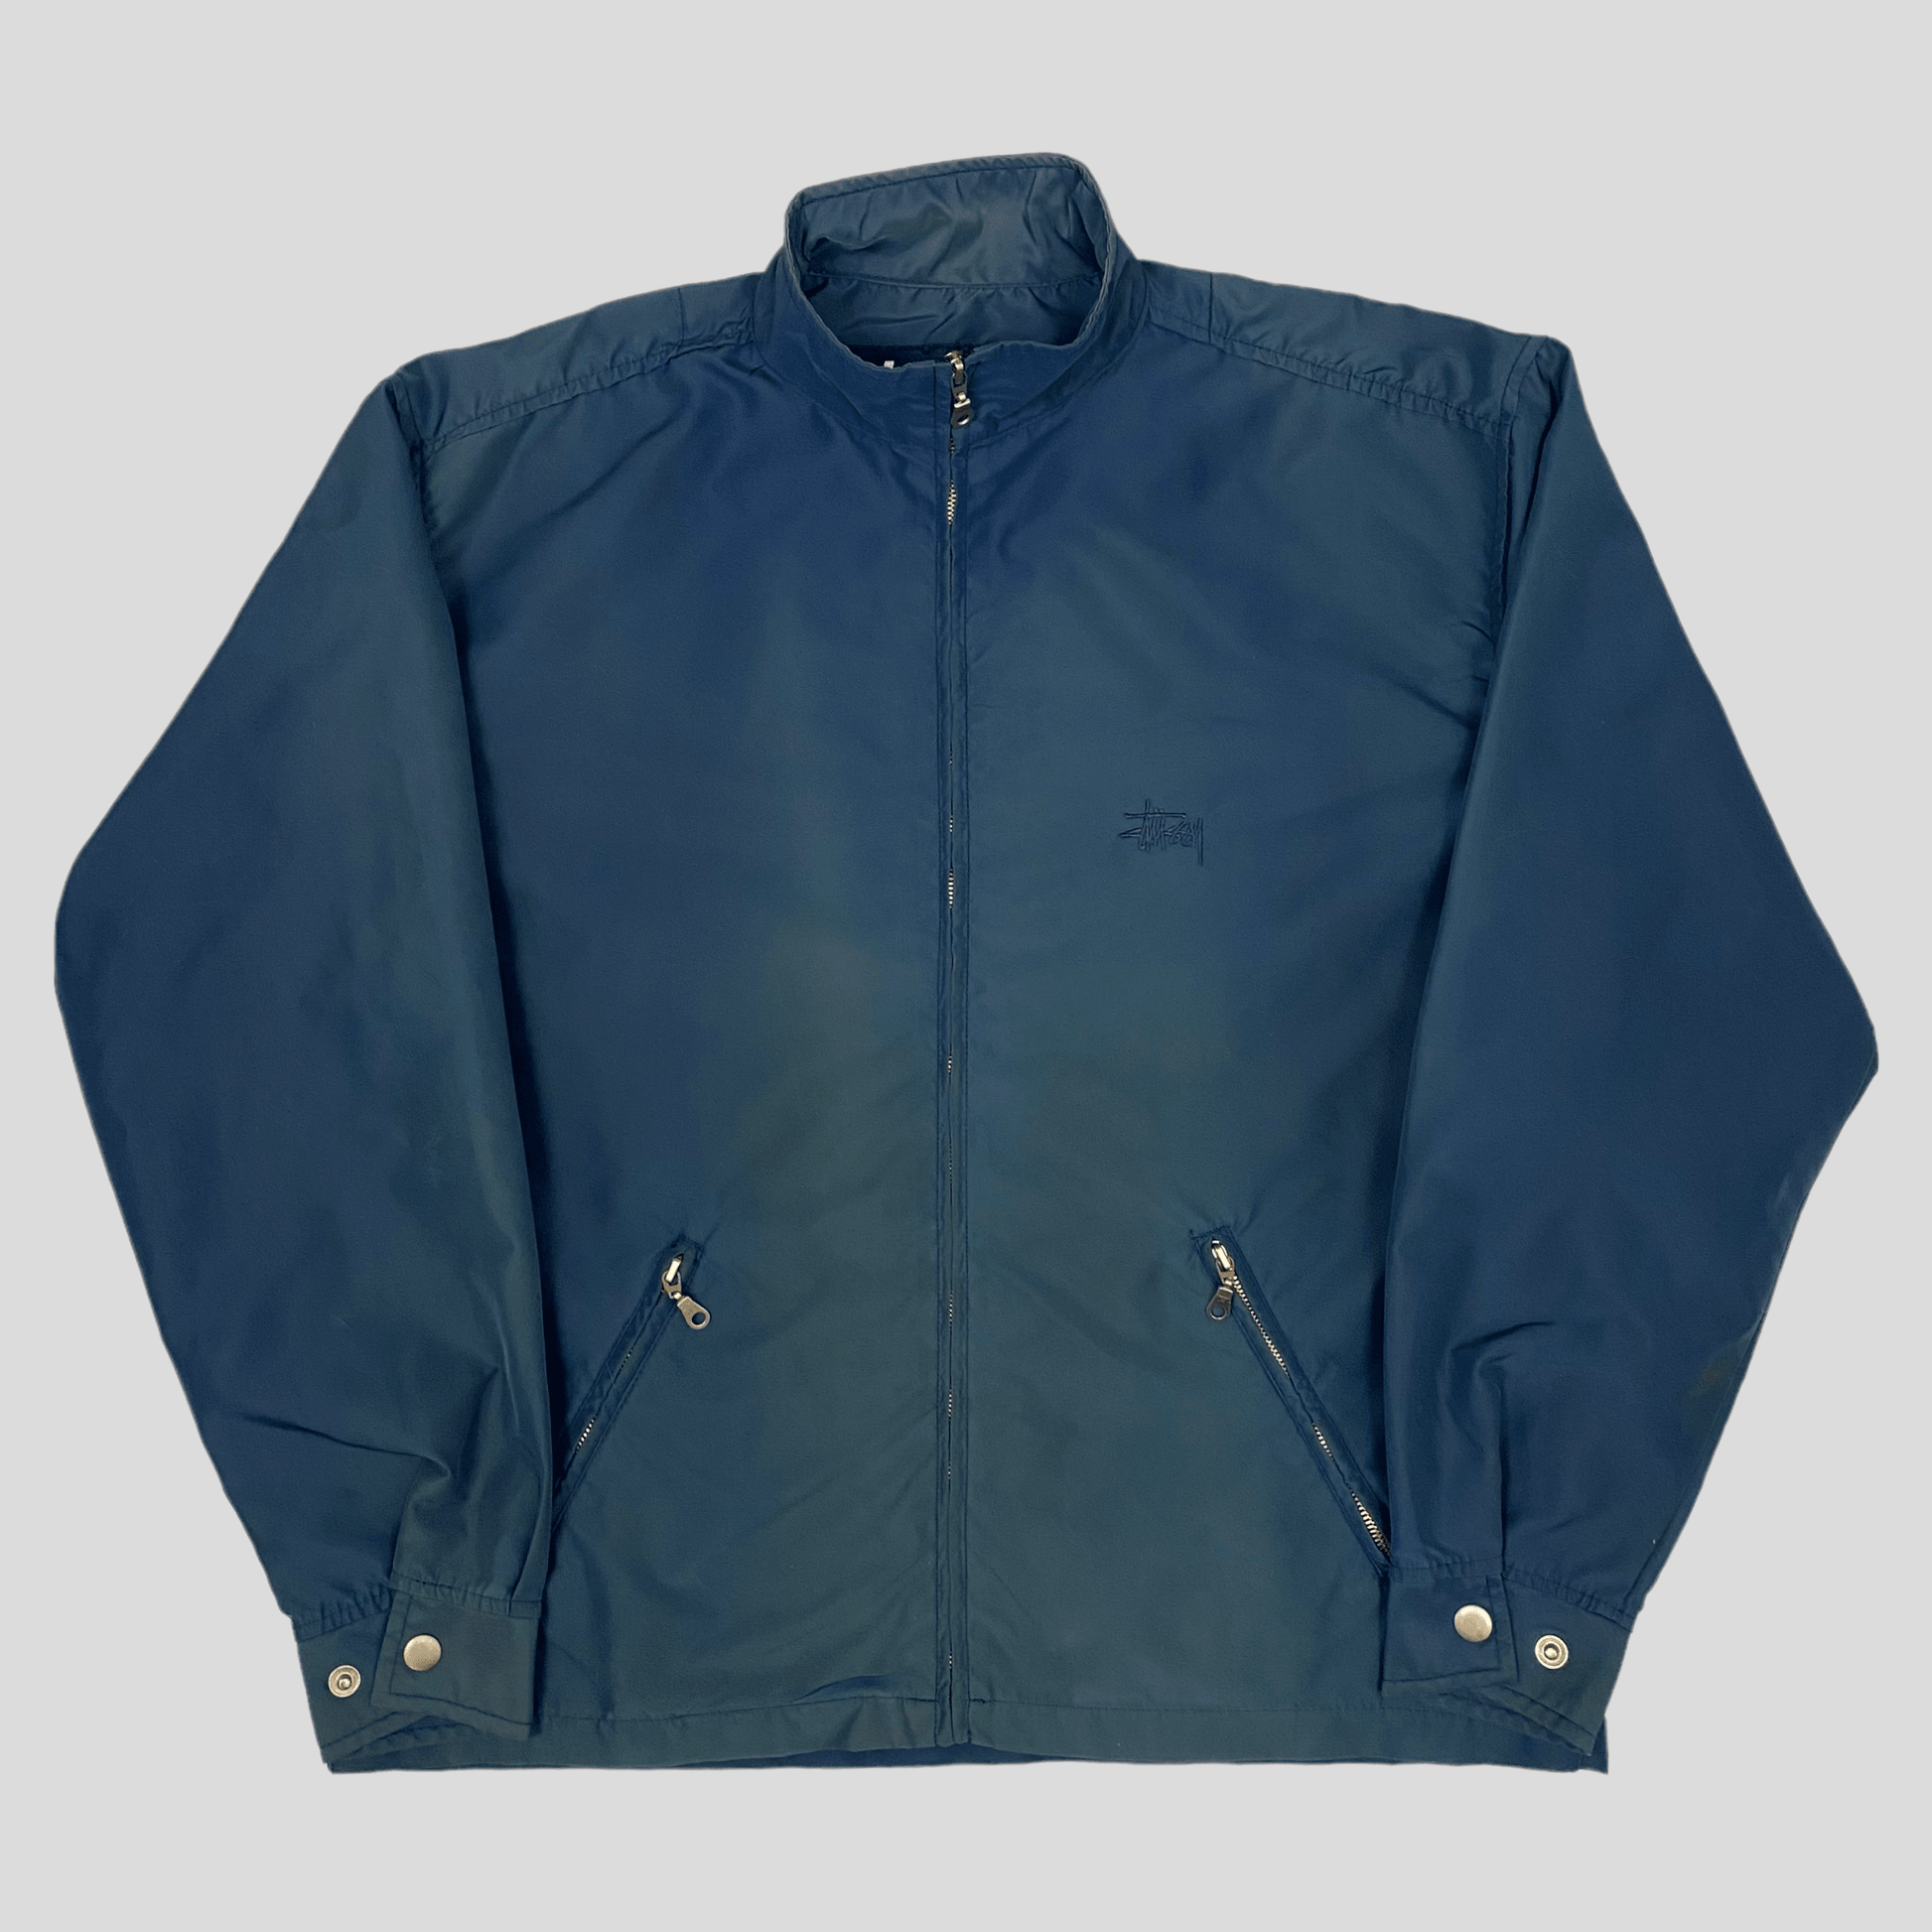 Stussy 90’s Nylon Shimmer Jacket - L (XL) - Known Source